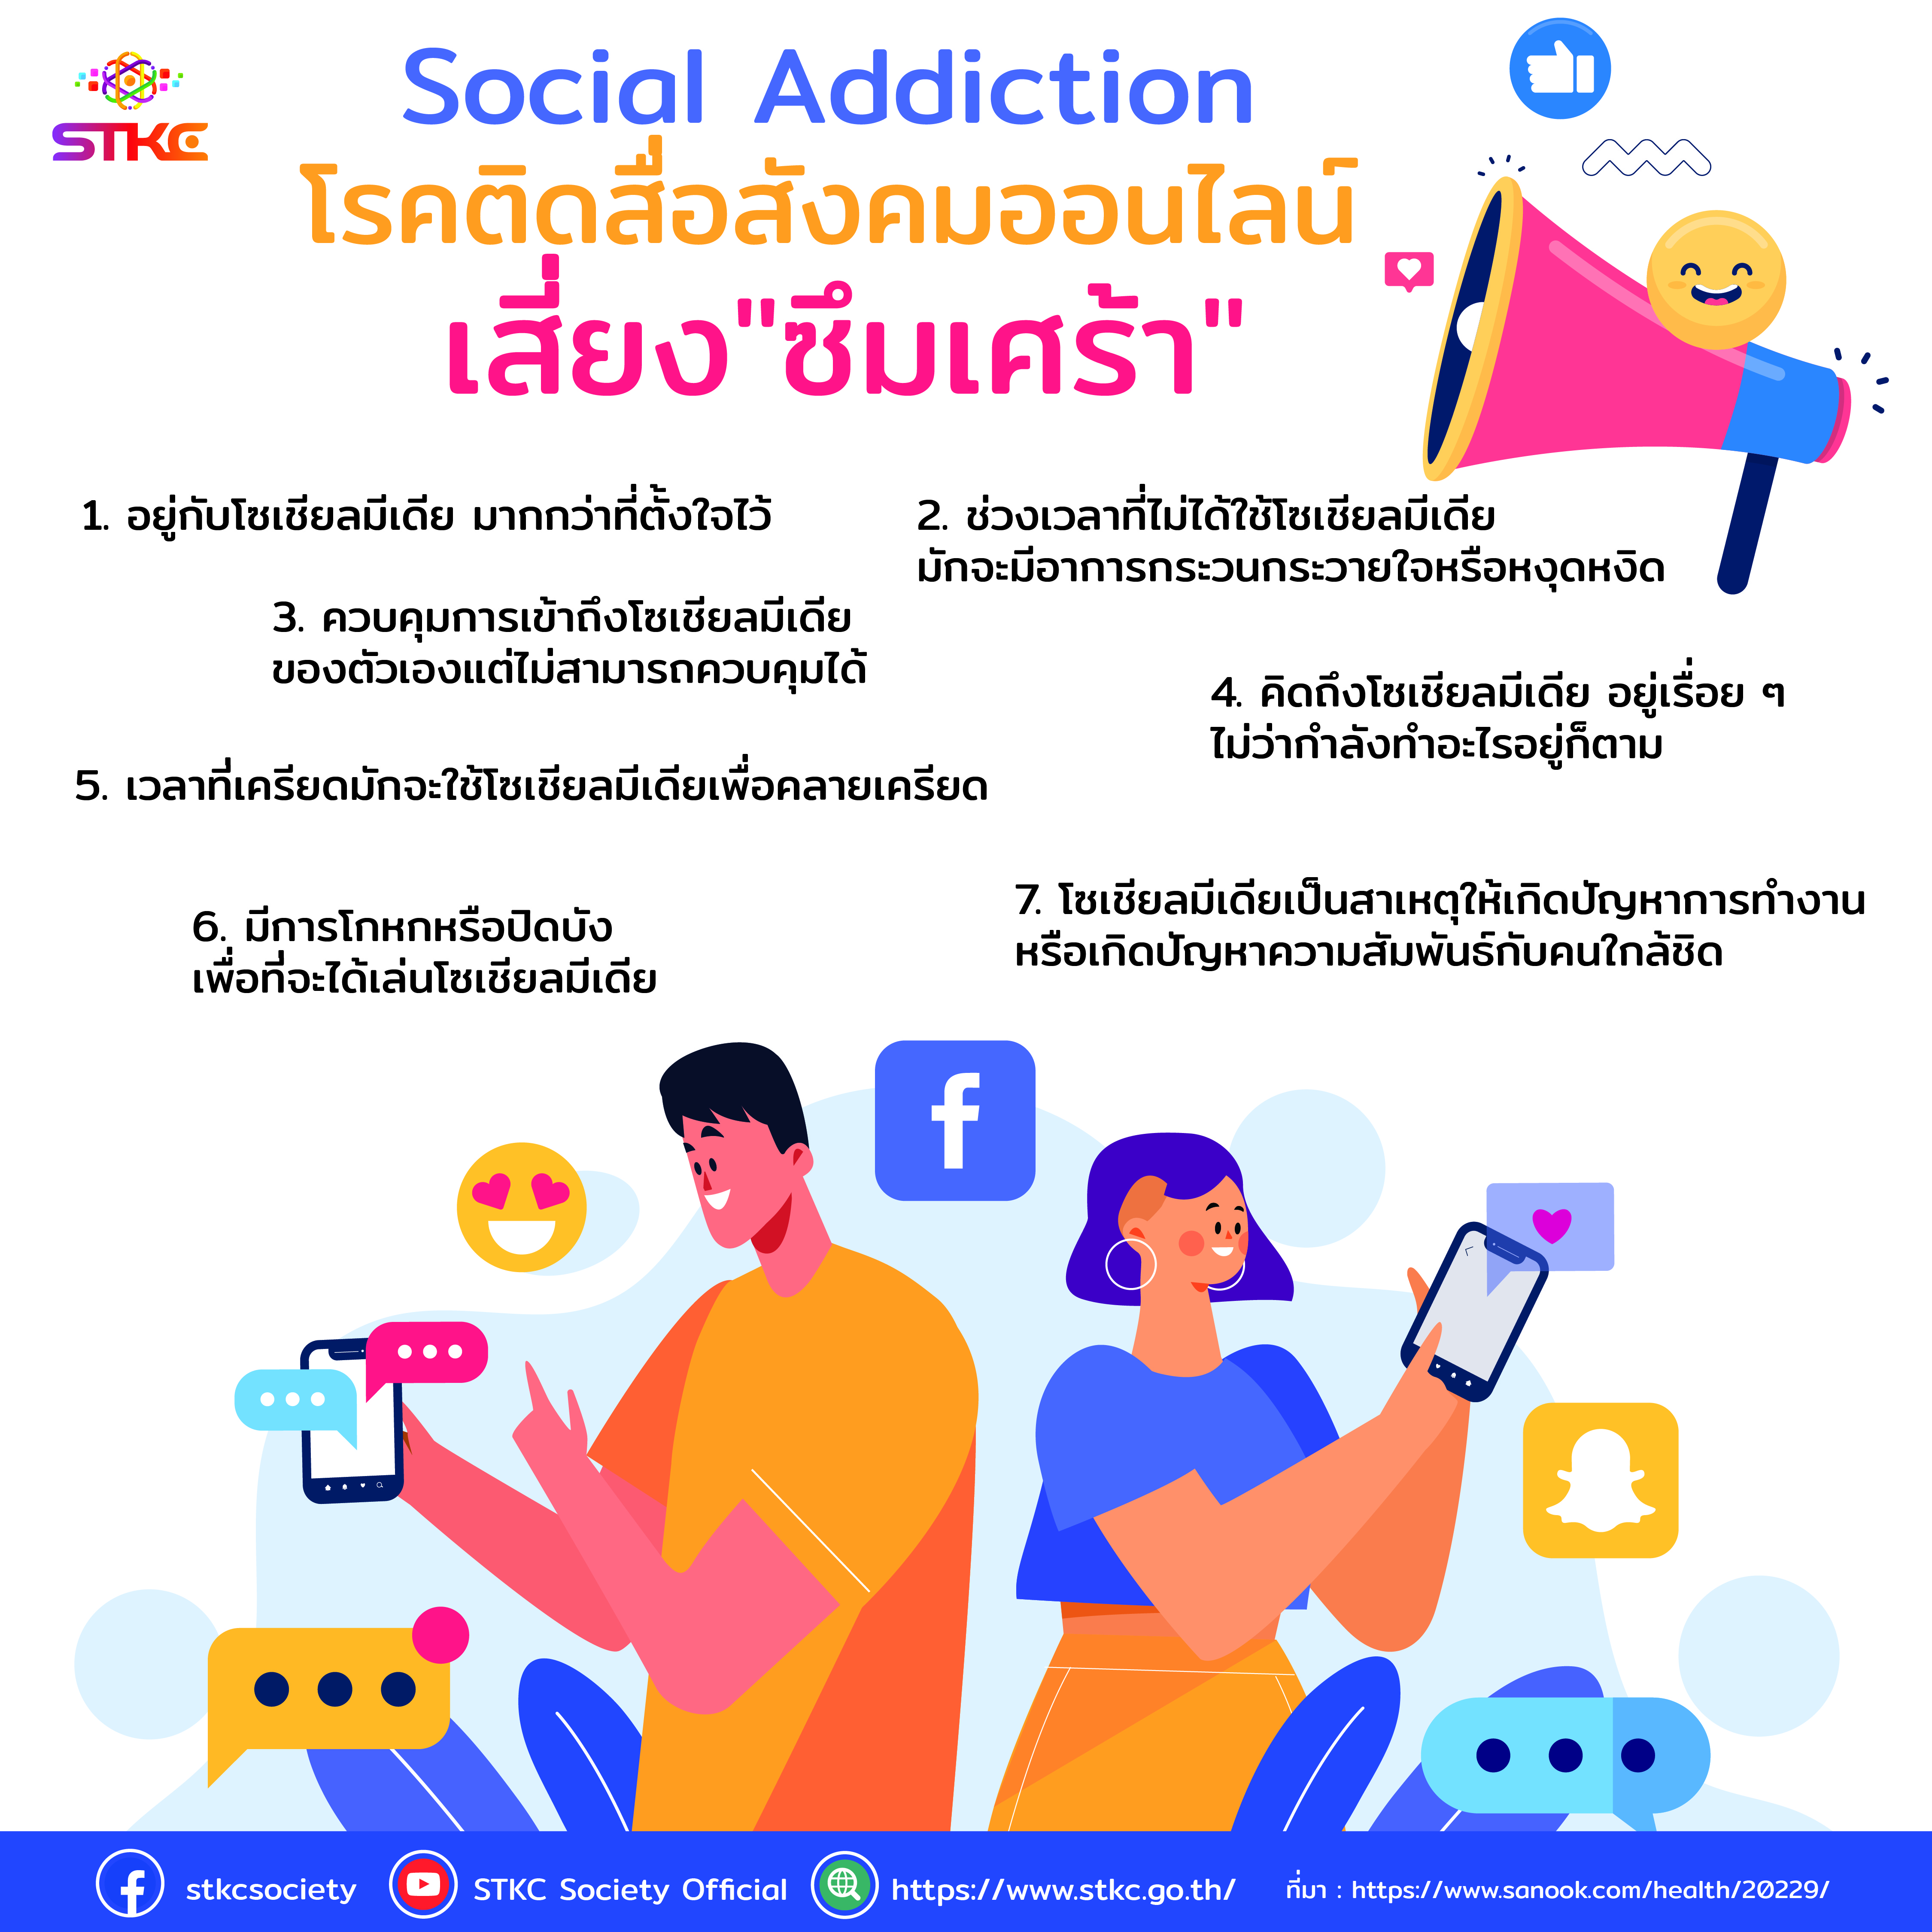 Social Addiction โรคติดสื่อสังคมออนไลน์ เสี่ยงก่อภาวะซึมเศร้า